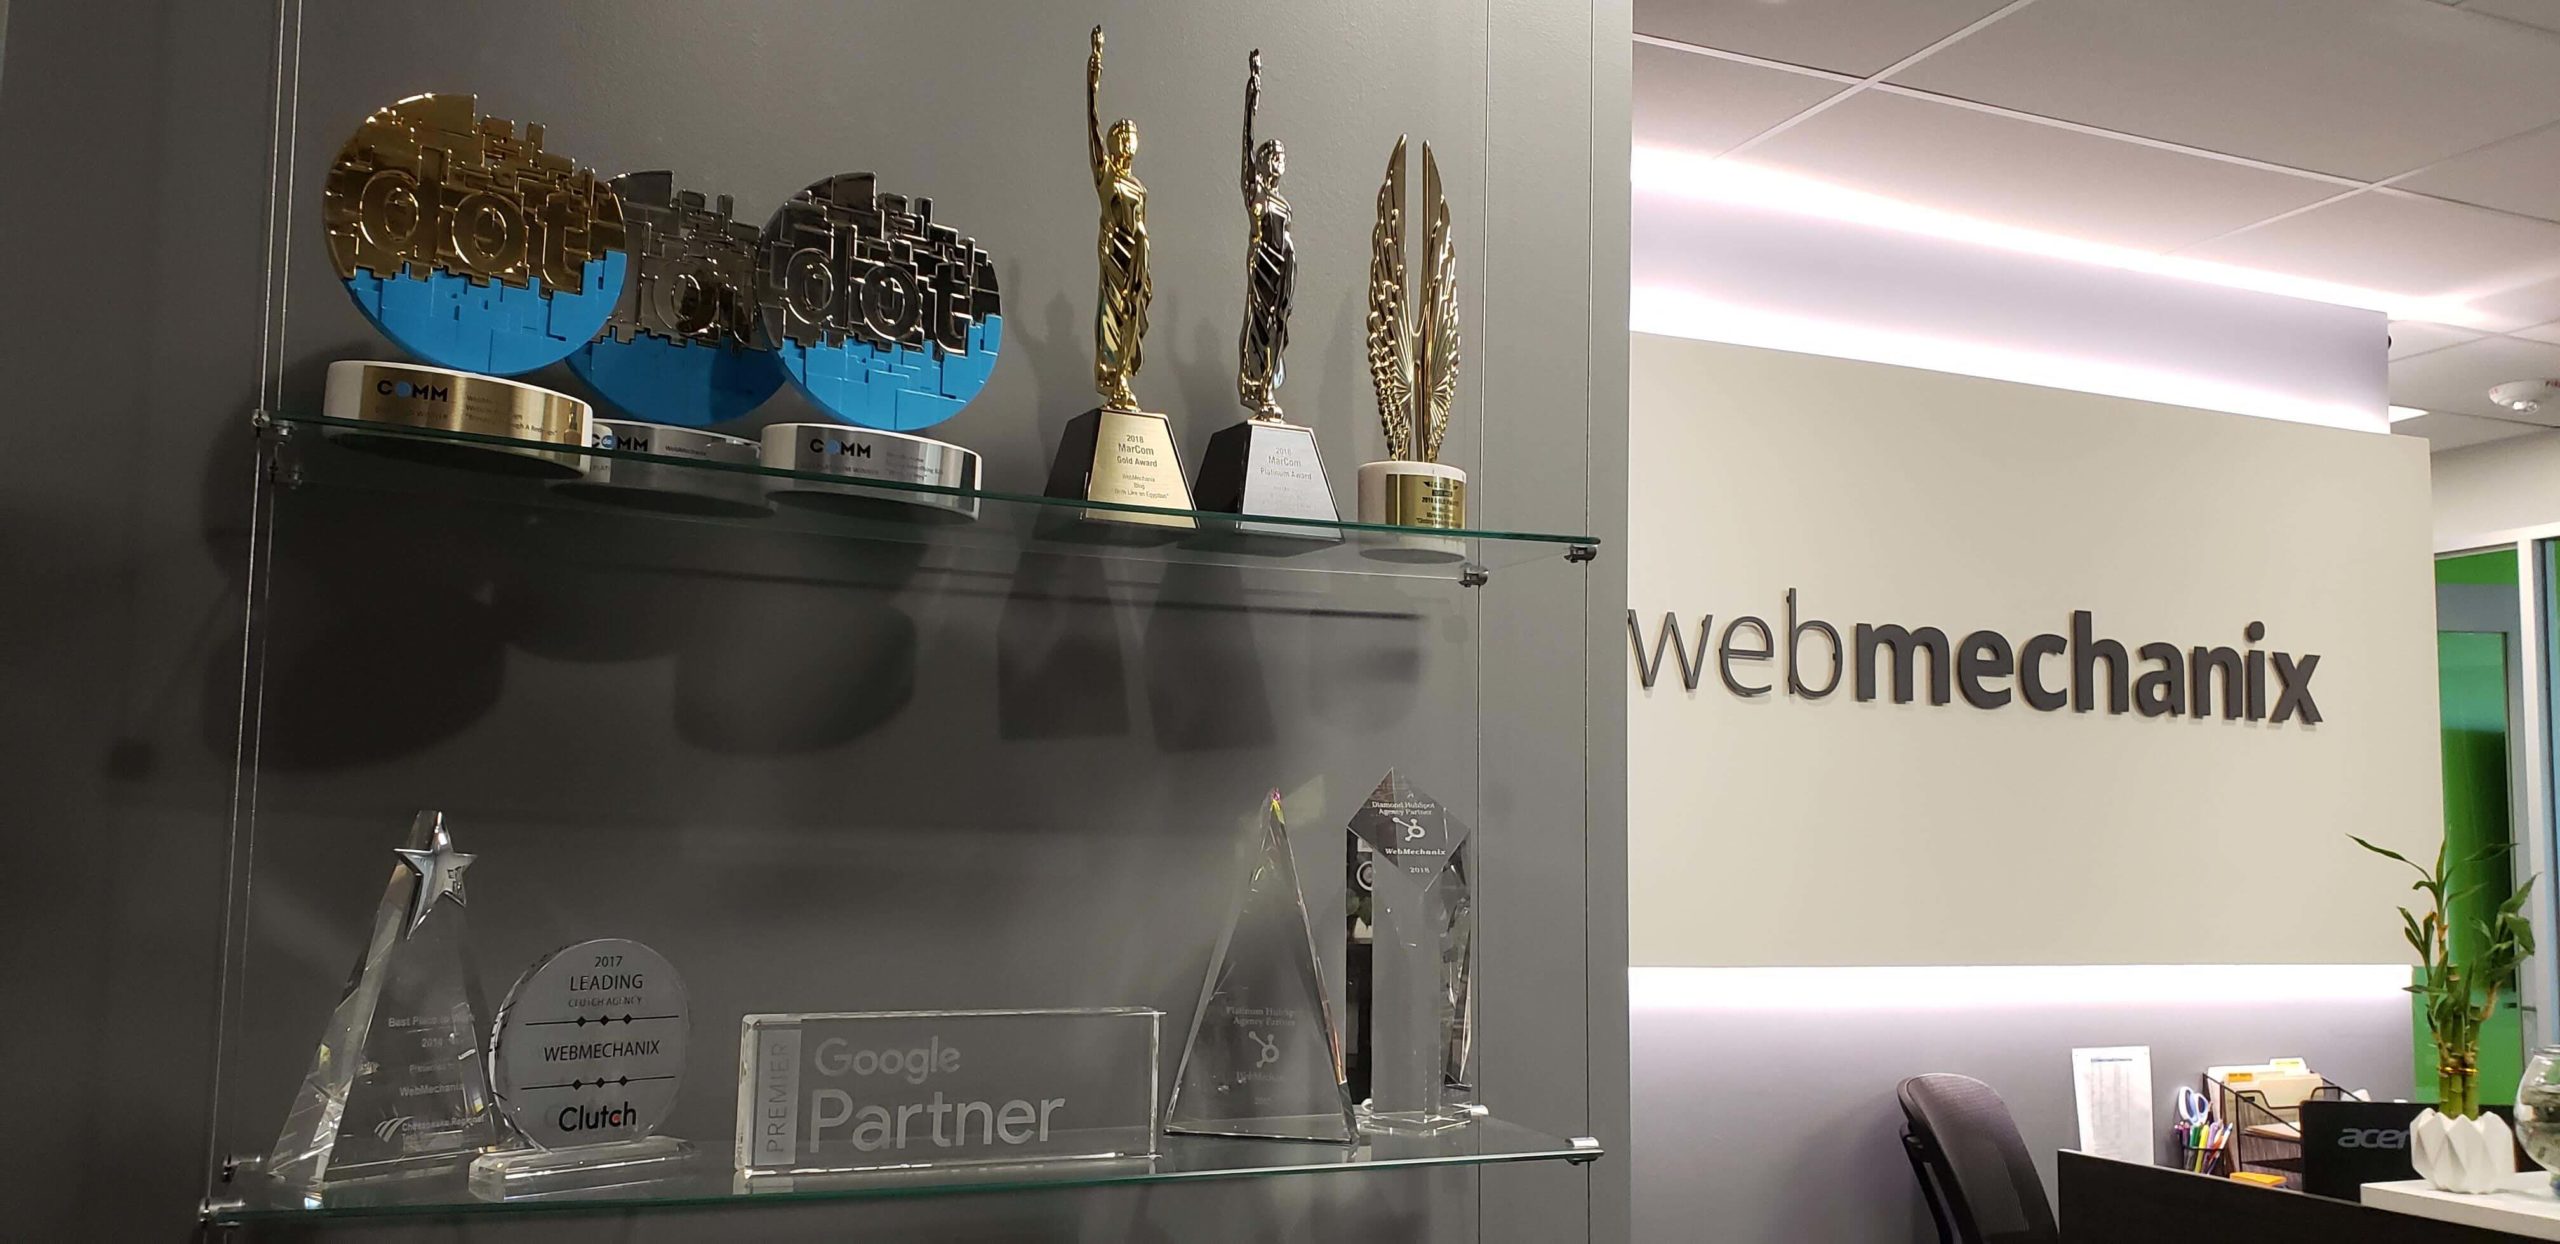 WebMechanix wins AVA Awards 2019